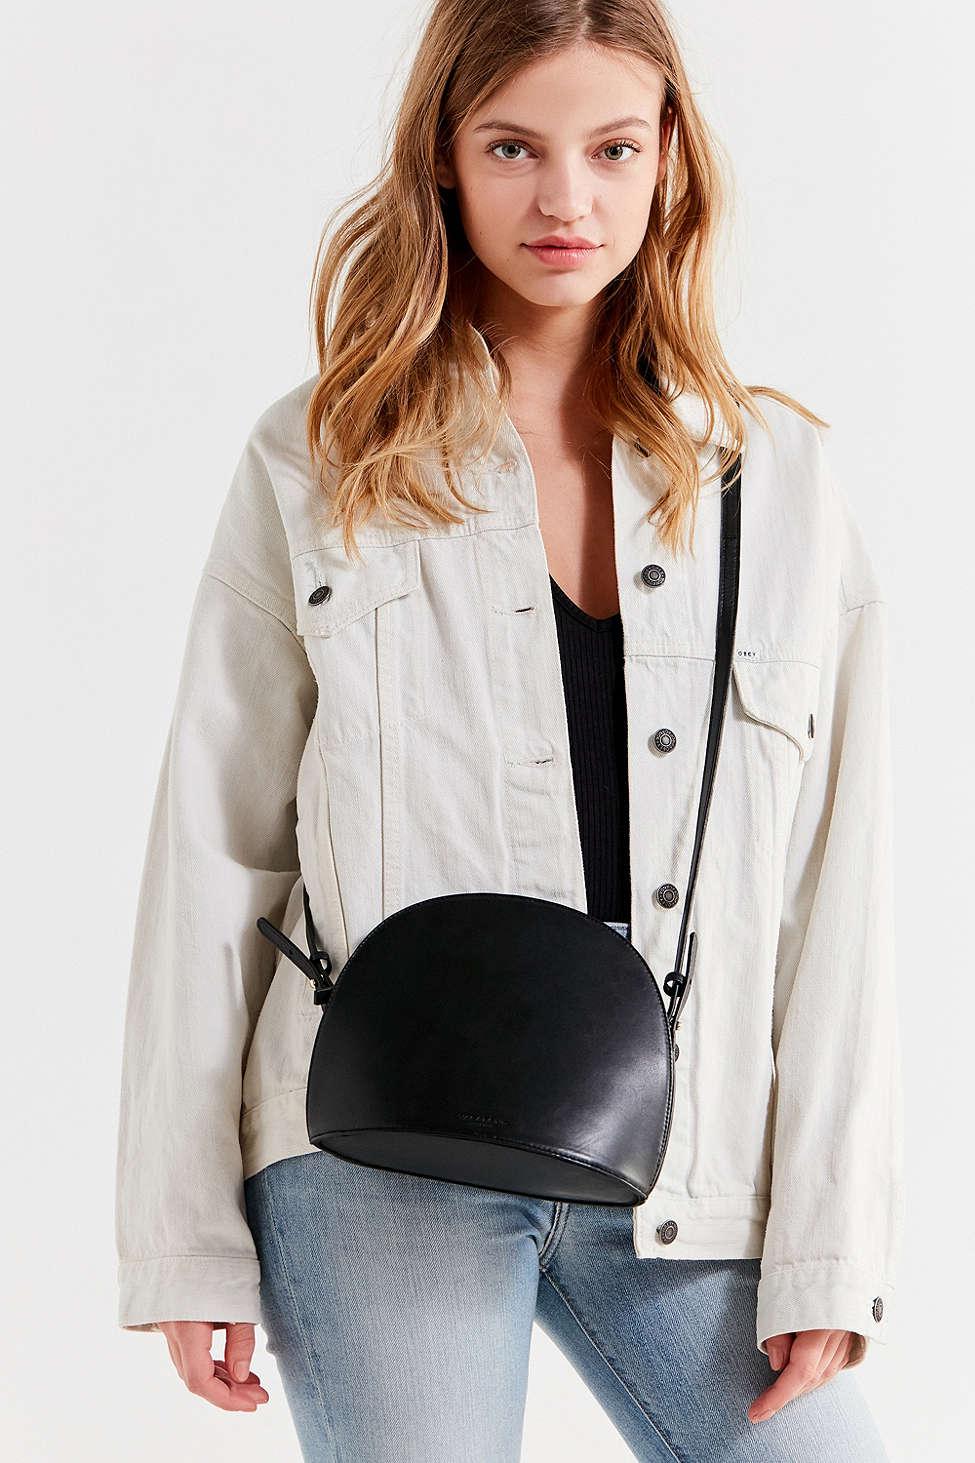 Vagabond Leather Shannon Crossbody Bag in Black - Lyst